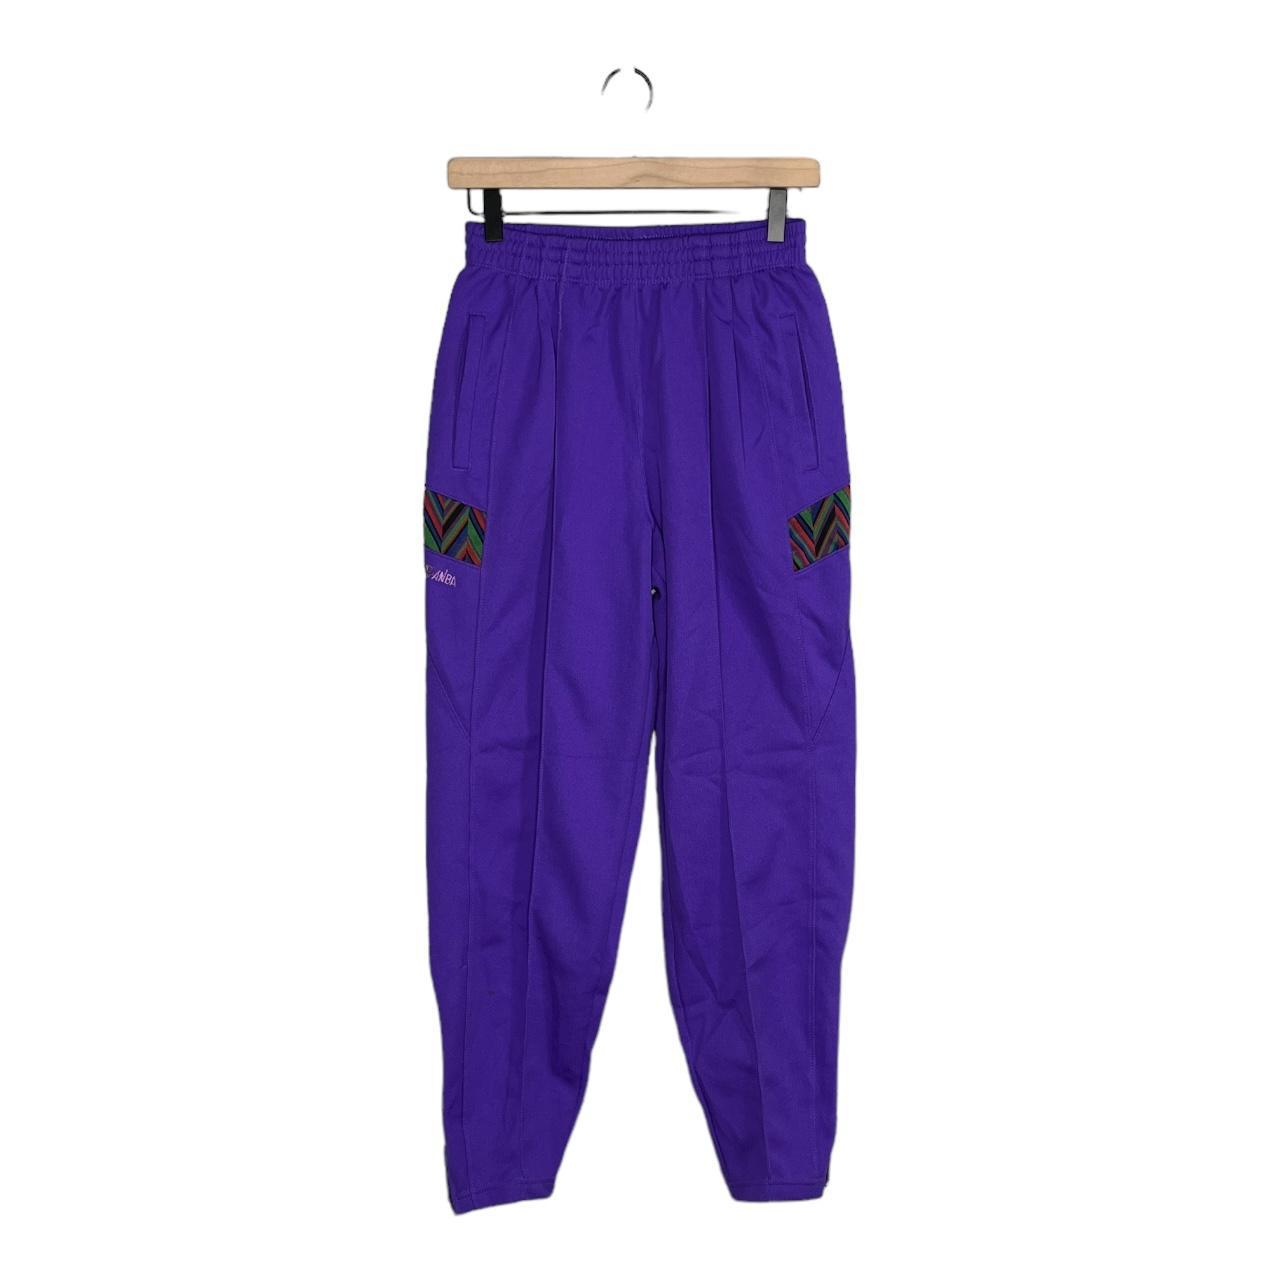 Medium 80s Purple Jogger Track Pants